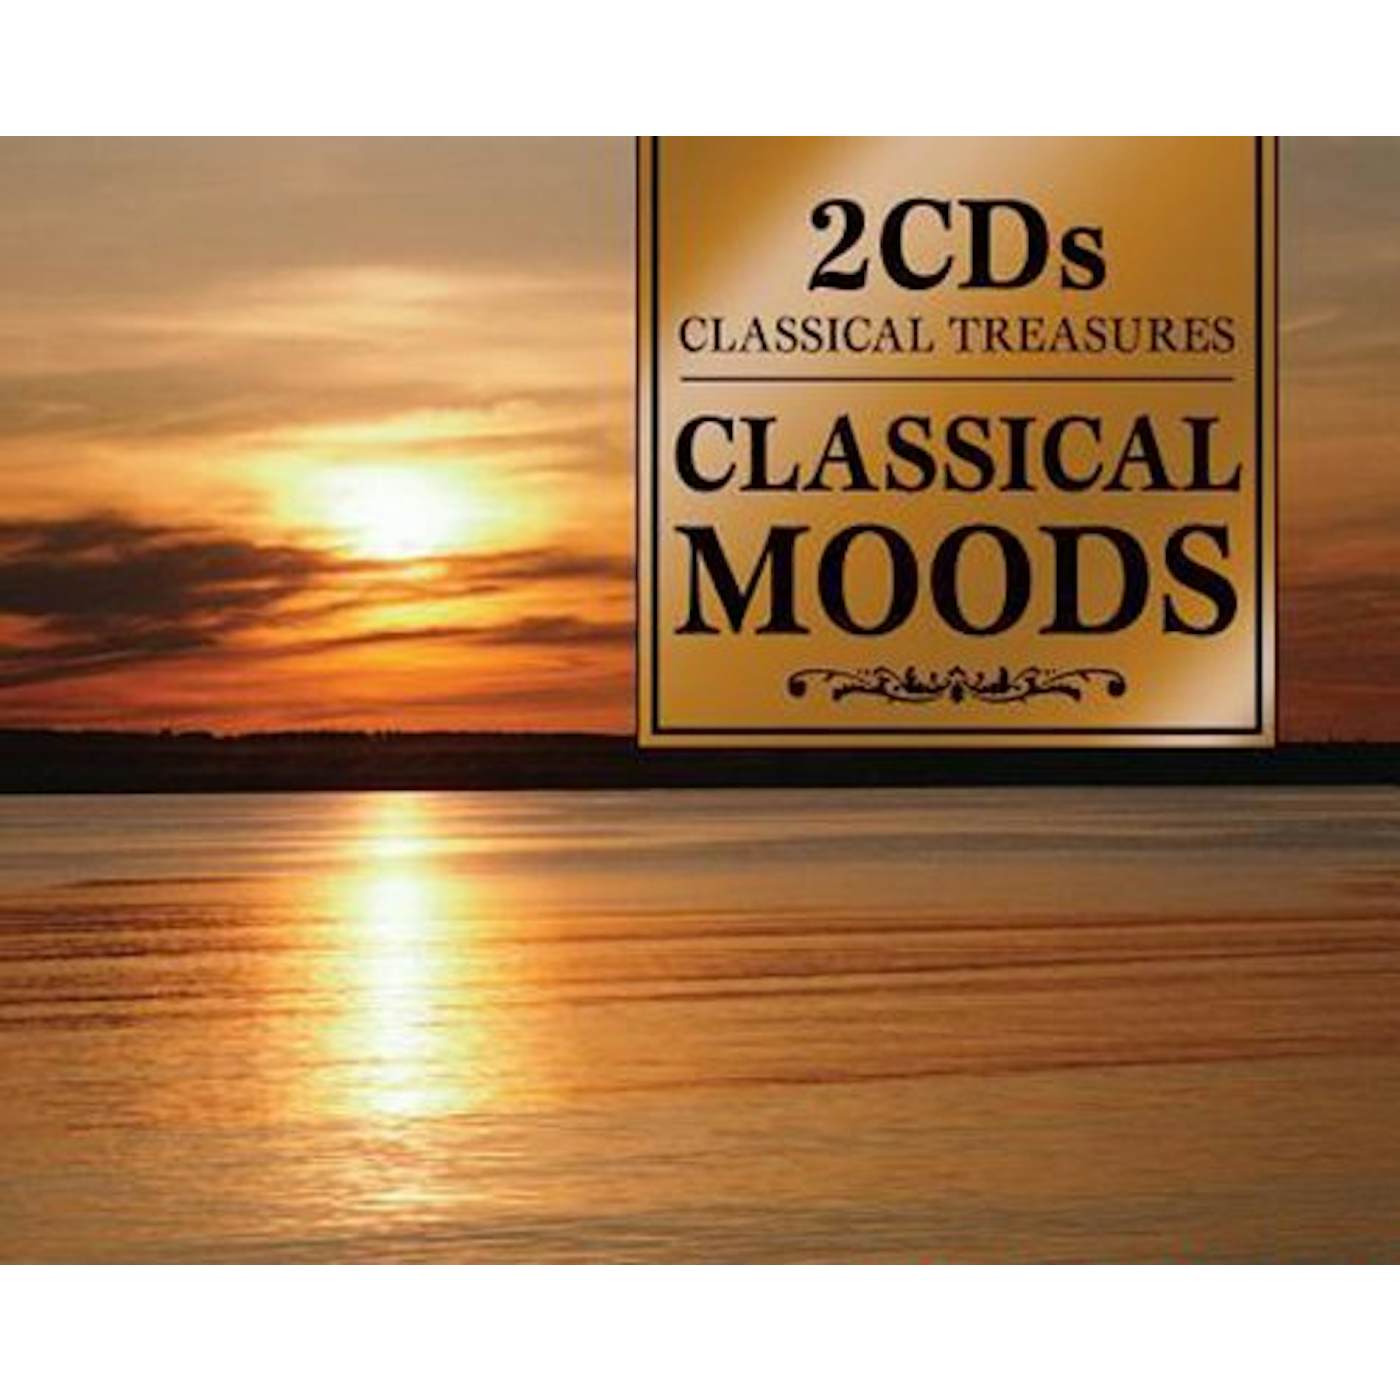 Classical Treasures CLASSICAL MOODS CD